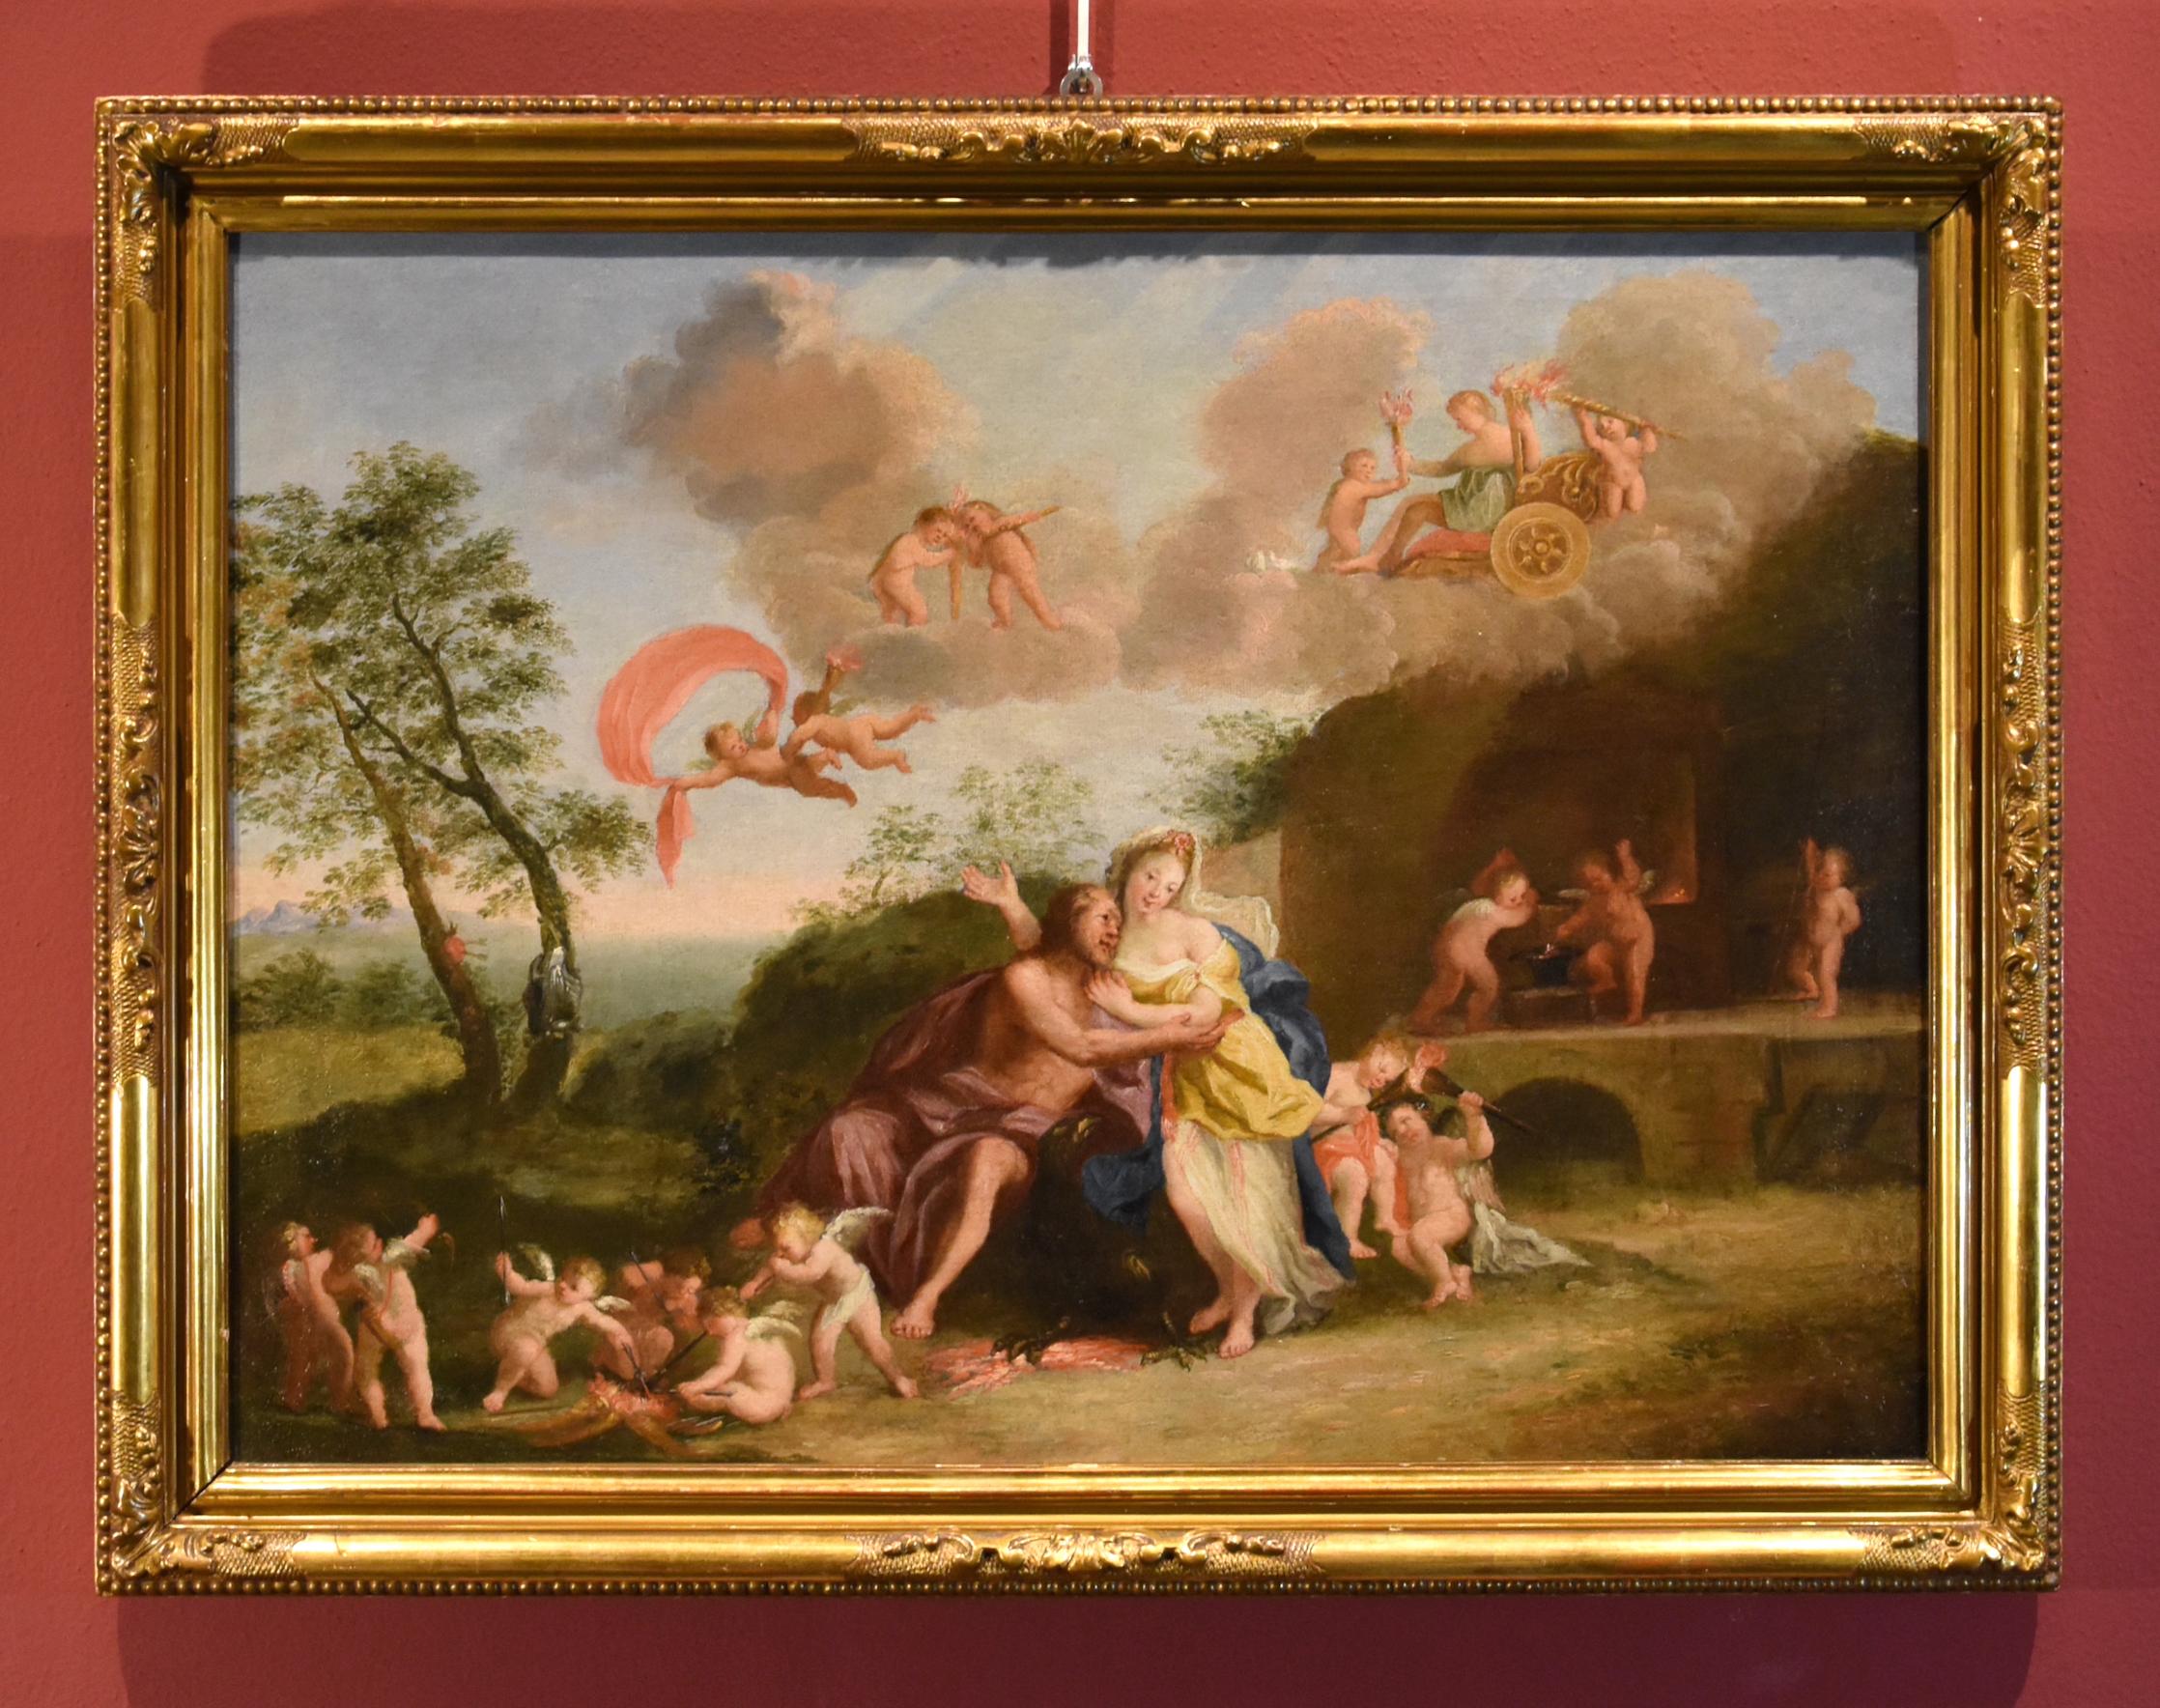 Mars Venus Albani, Gemälde, Öl auf Leinwand, 17. Jahrhundert, altmeister, mythologische – Painting von Francesco Albani (Bologna 1578 - 1660) Circle of